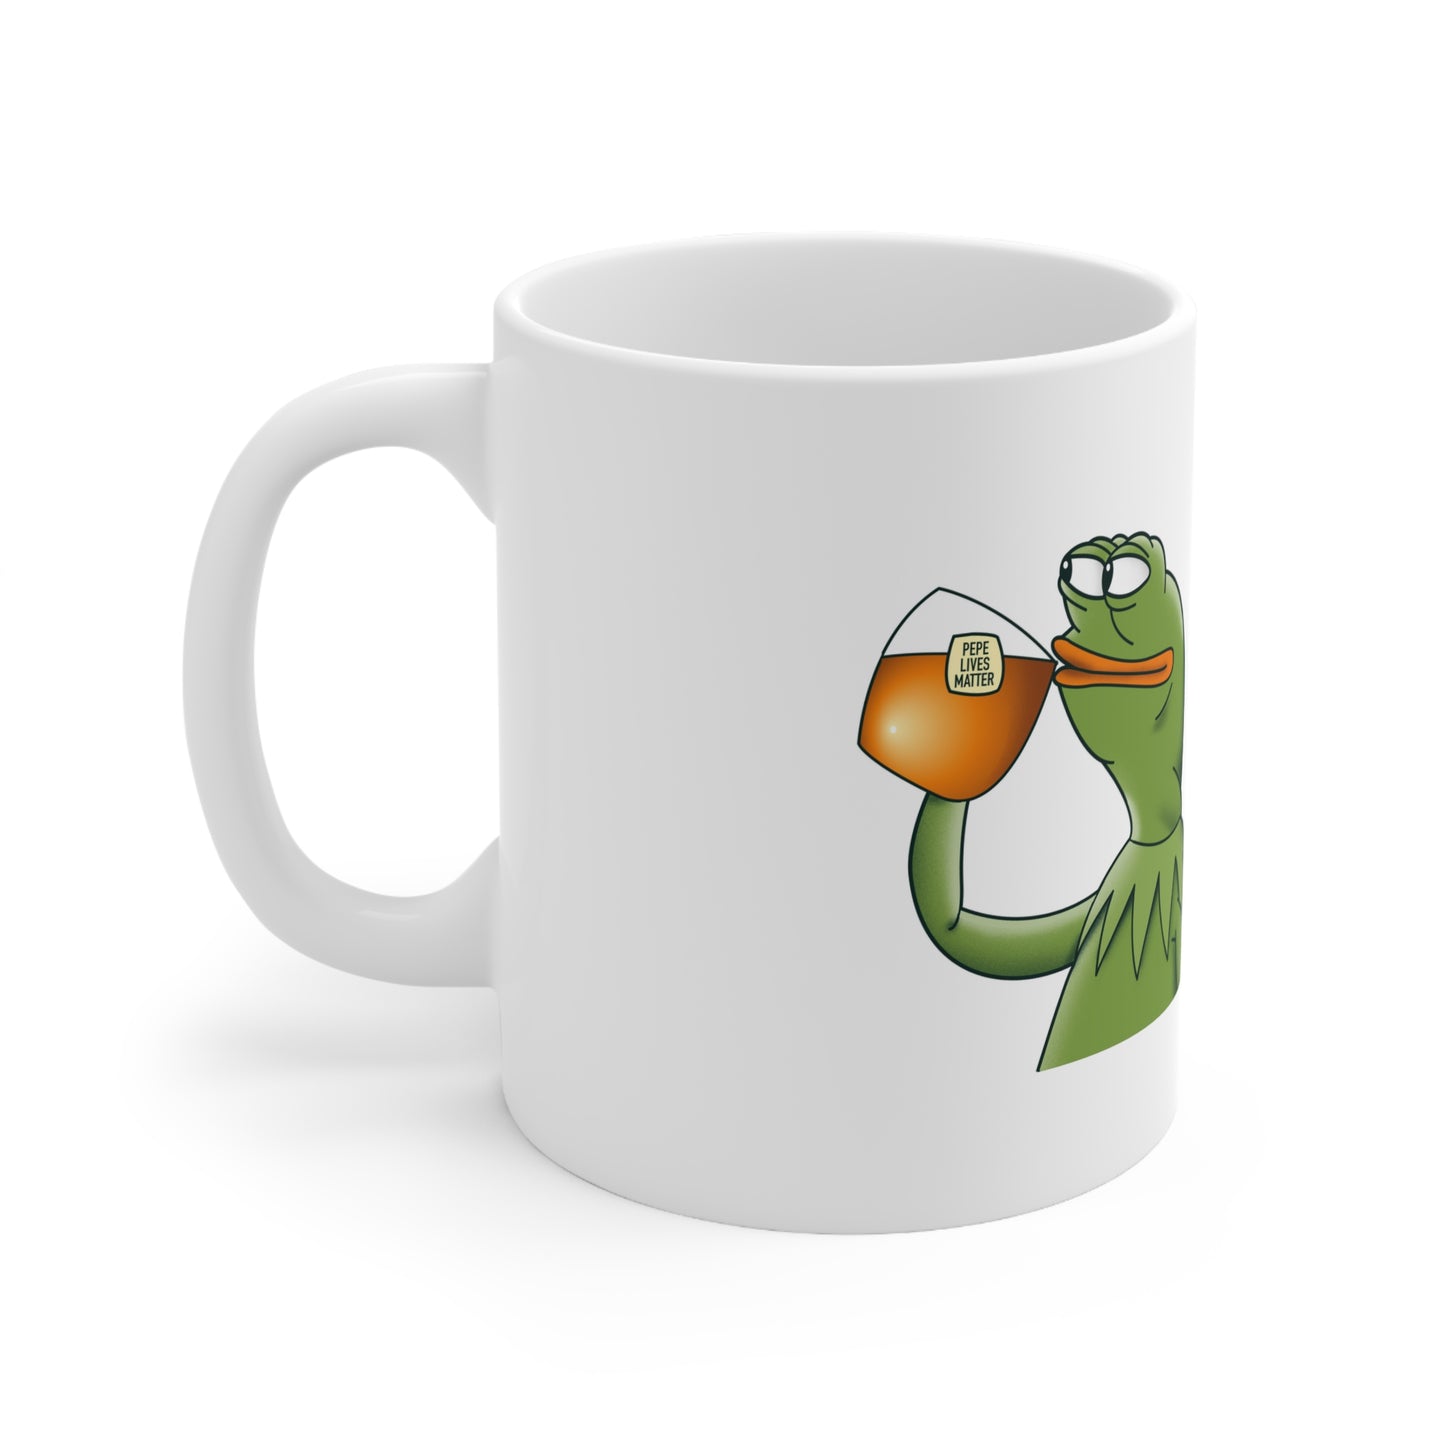 Pepe Lives Matter Mug 3